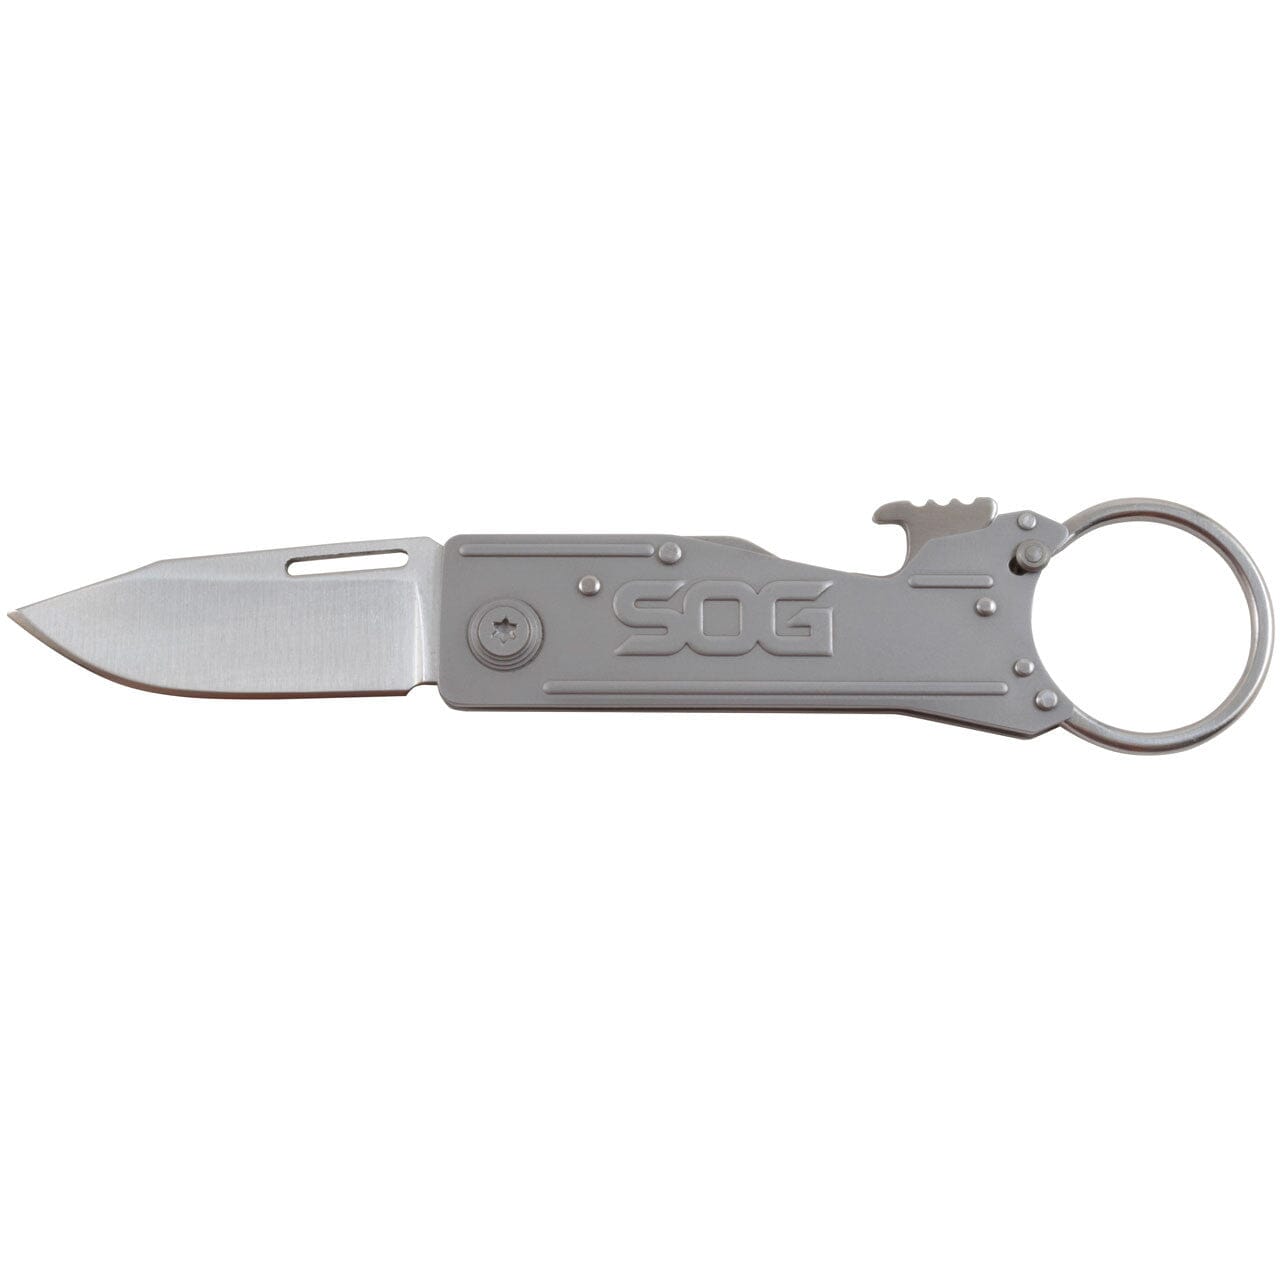 Keytron Keychain Hunting & Survival Knives SOG Specialty Knives & Tools 